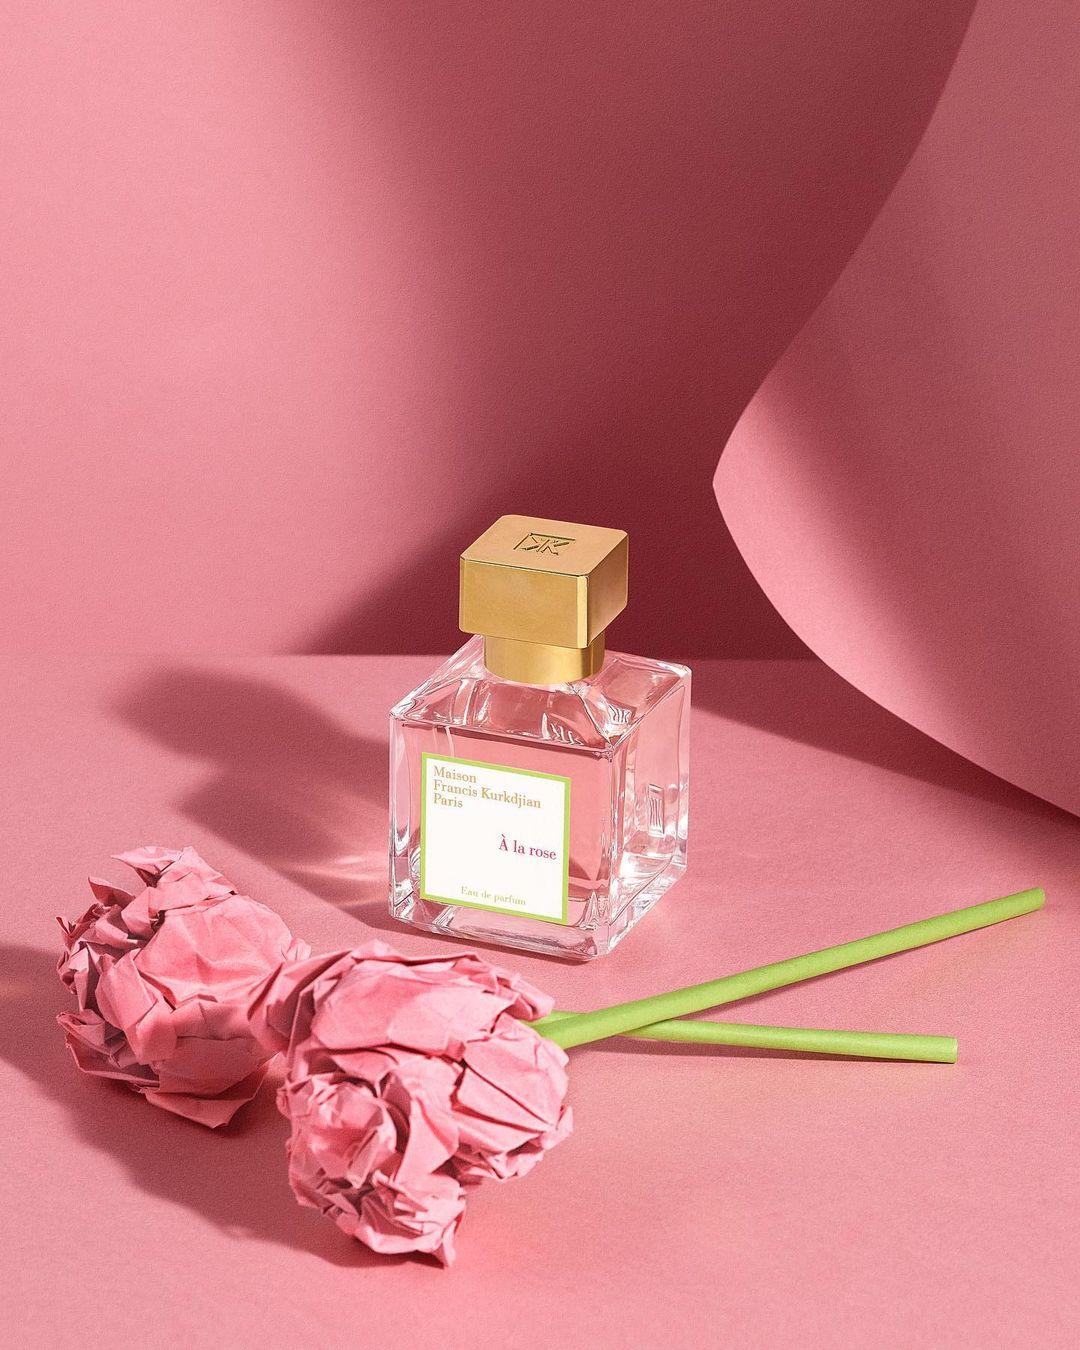 Maison Francis Kurkdjian - A la rose | Perfume Lounge